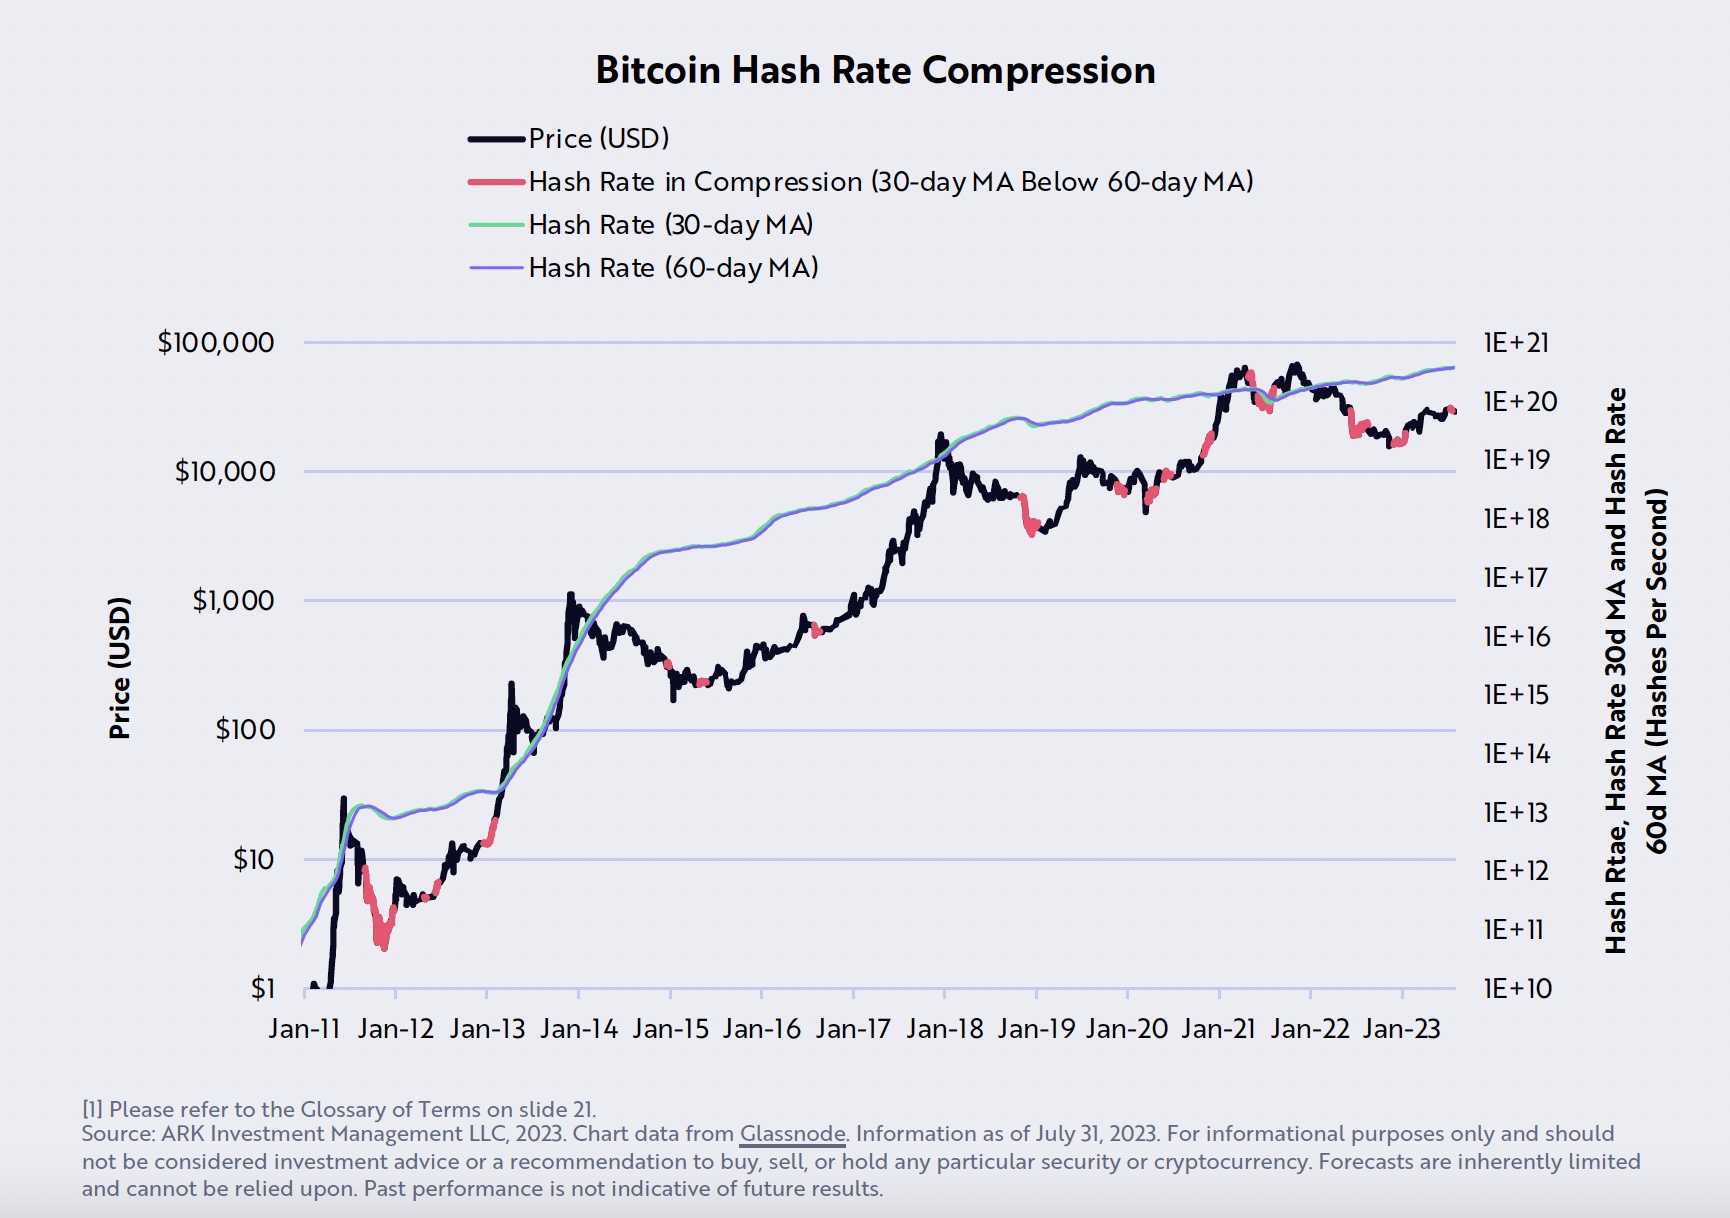 Bitcoin hash rate compression